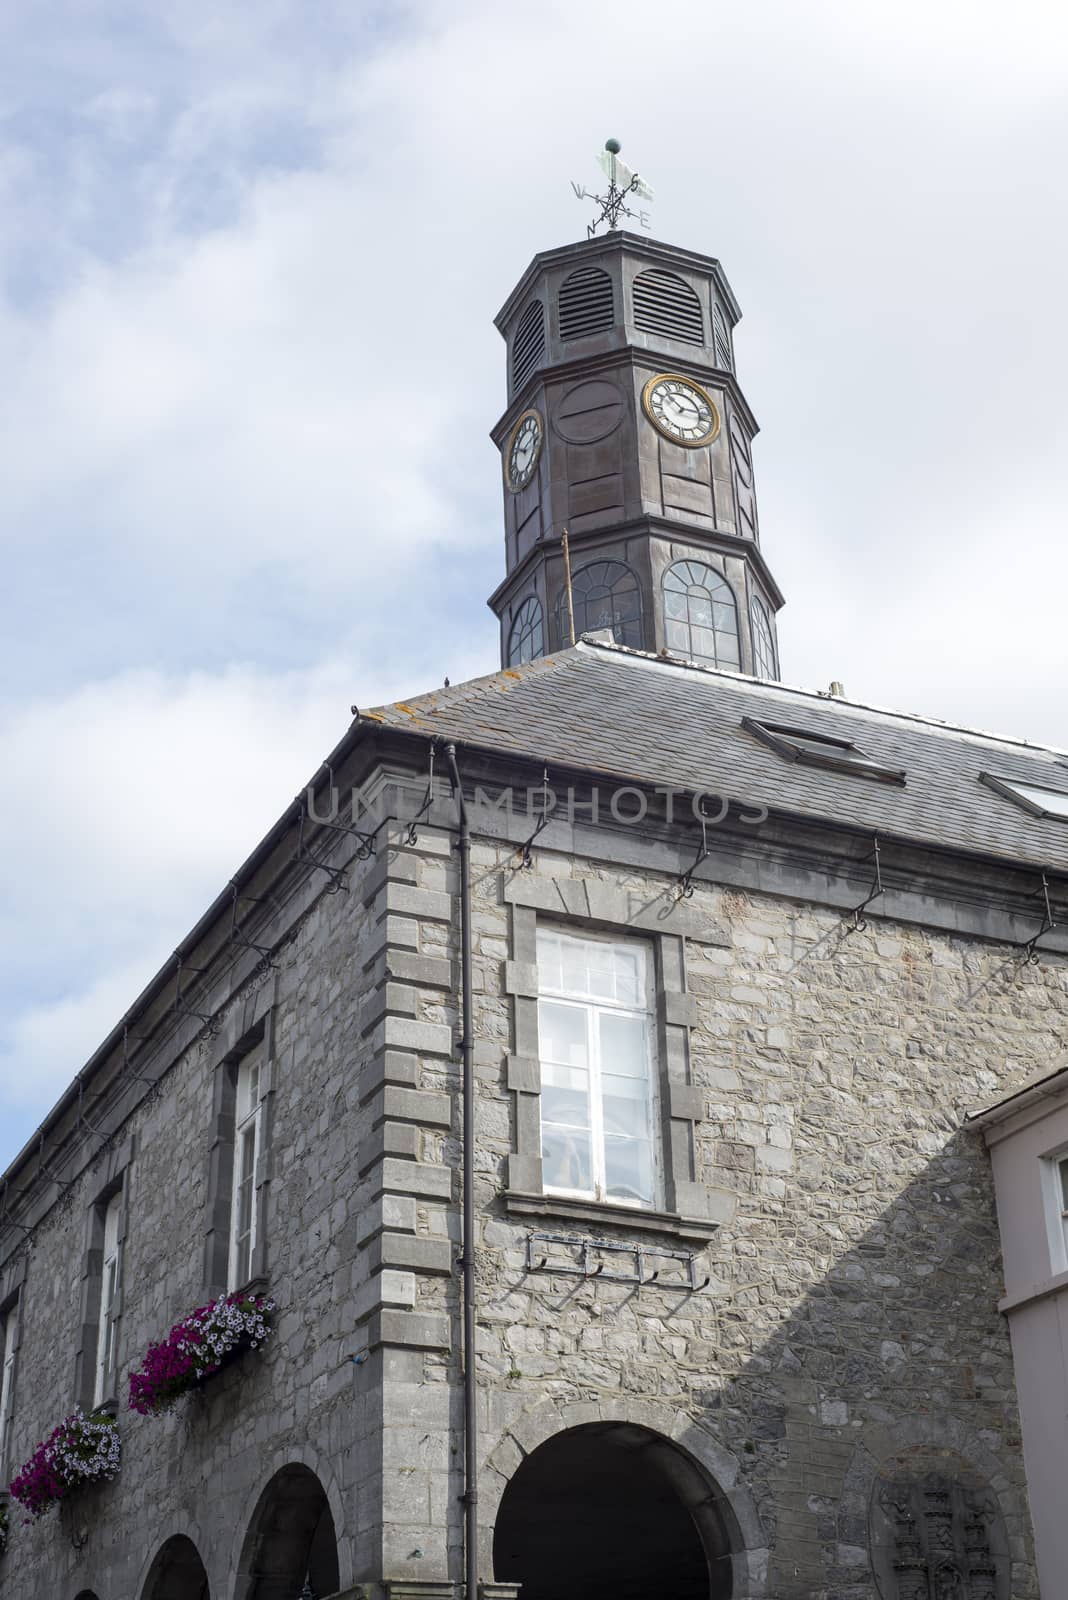 clock tower in kilkenny by morrbyte